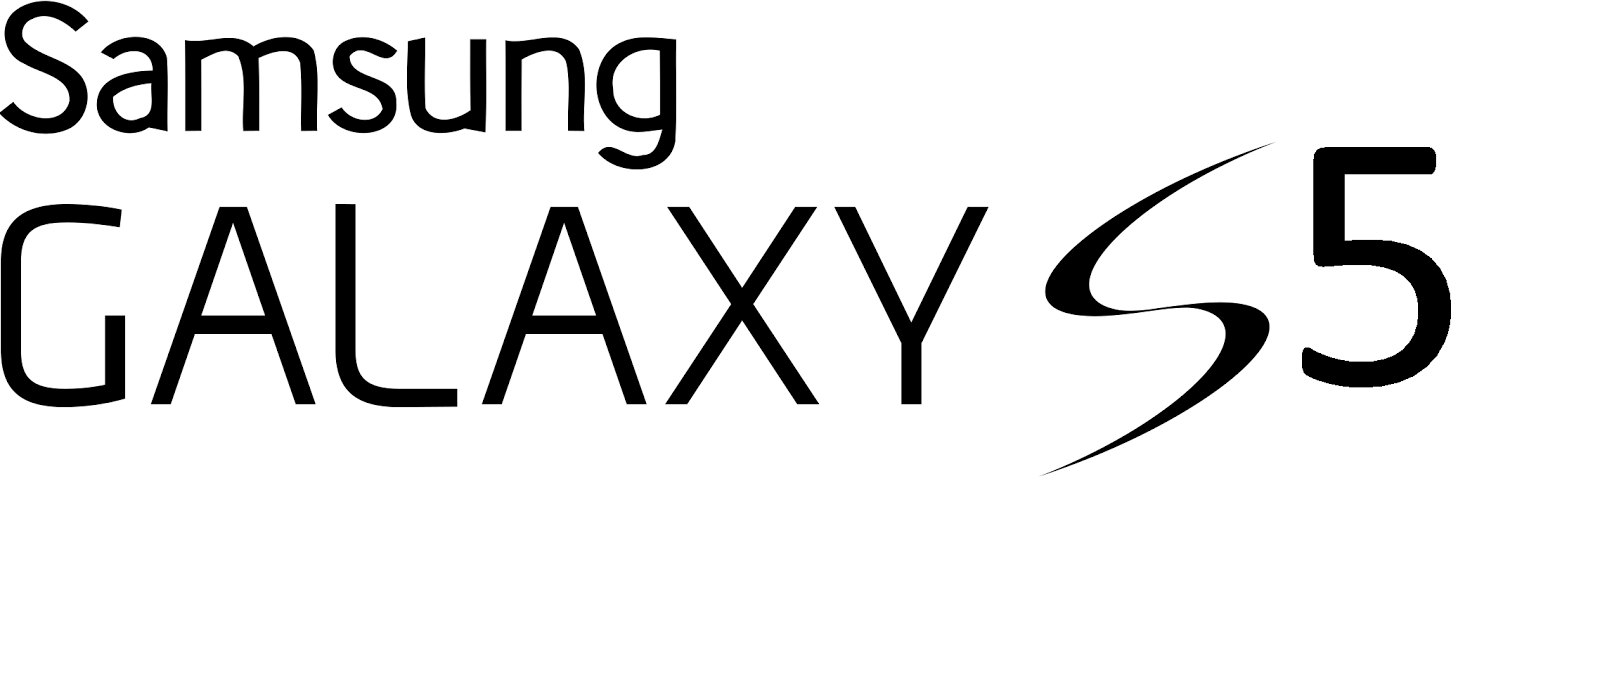 galaxy s5 logo png